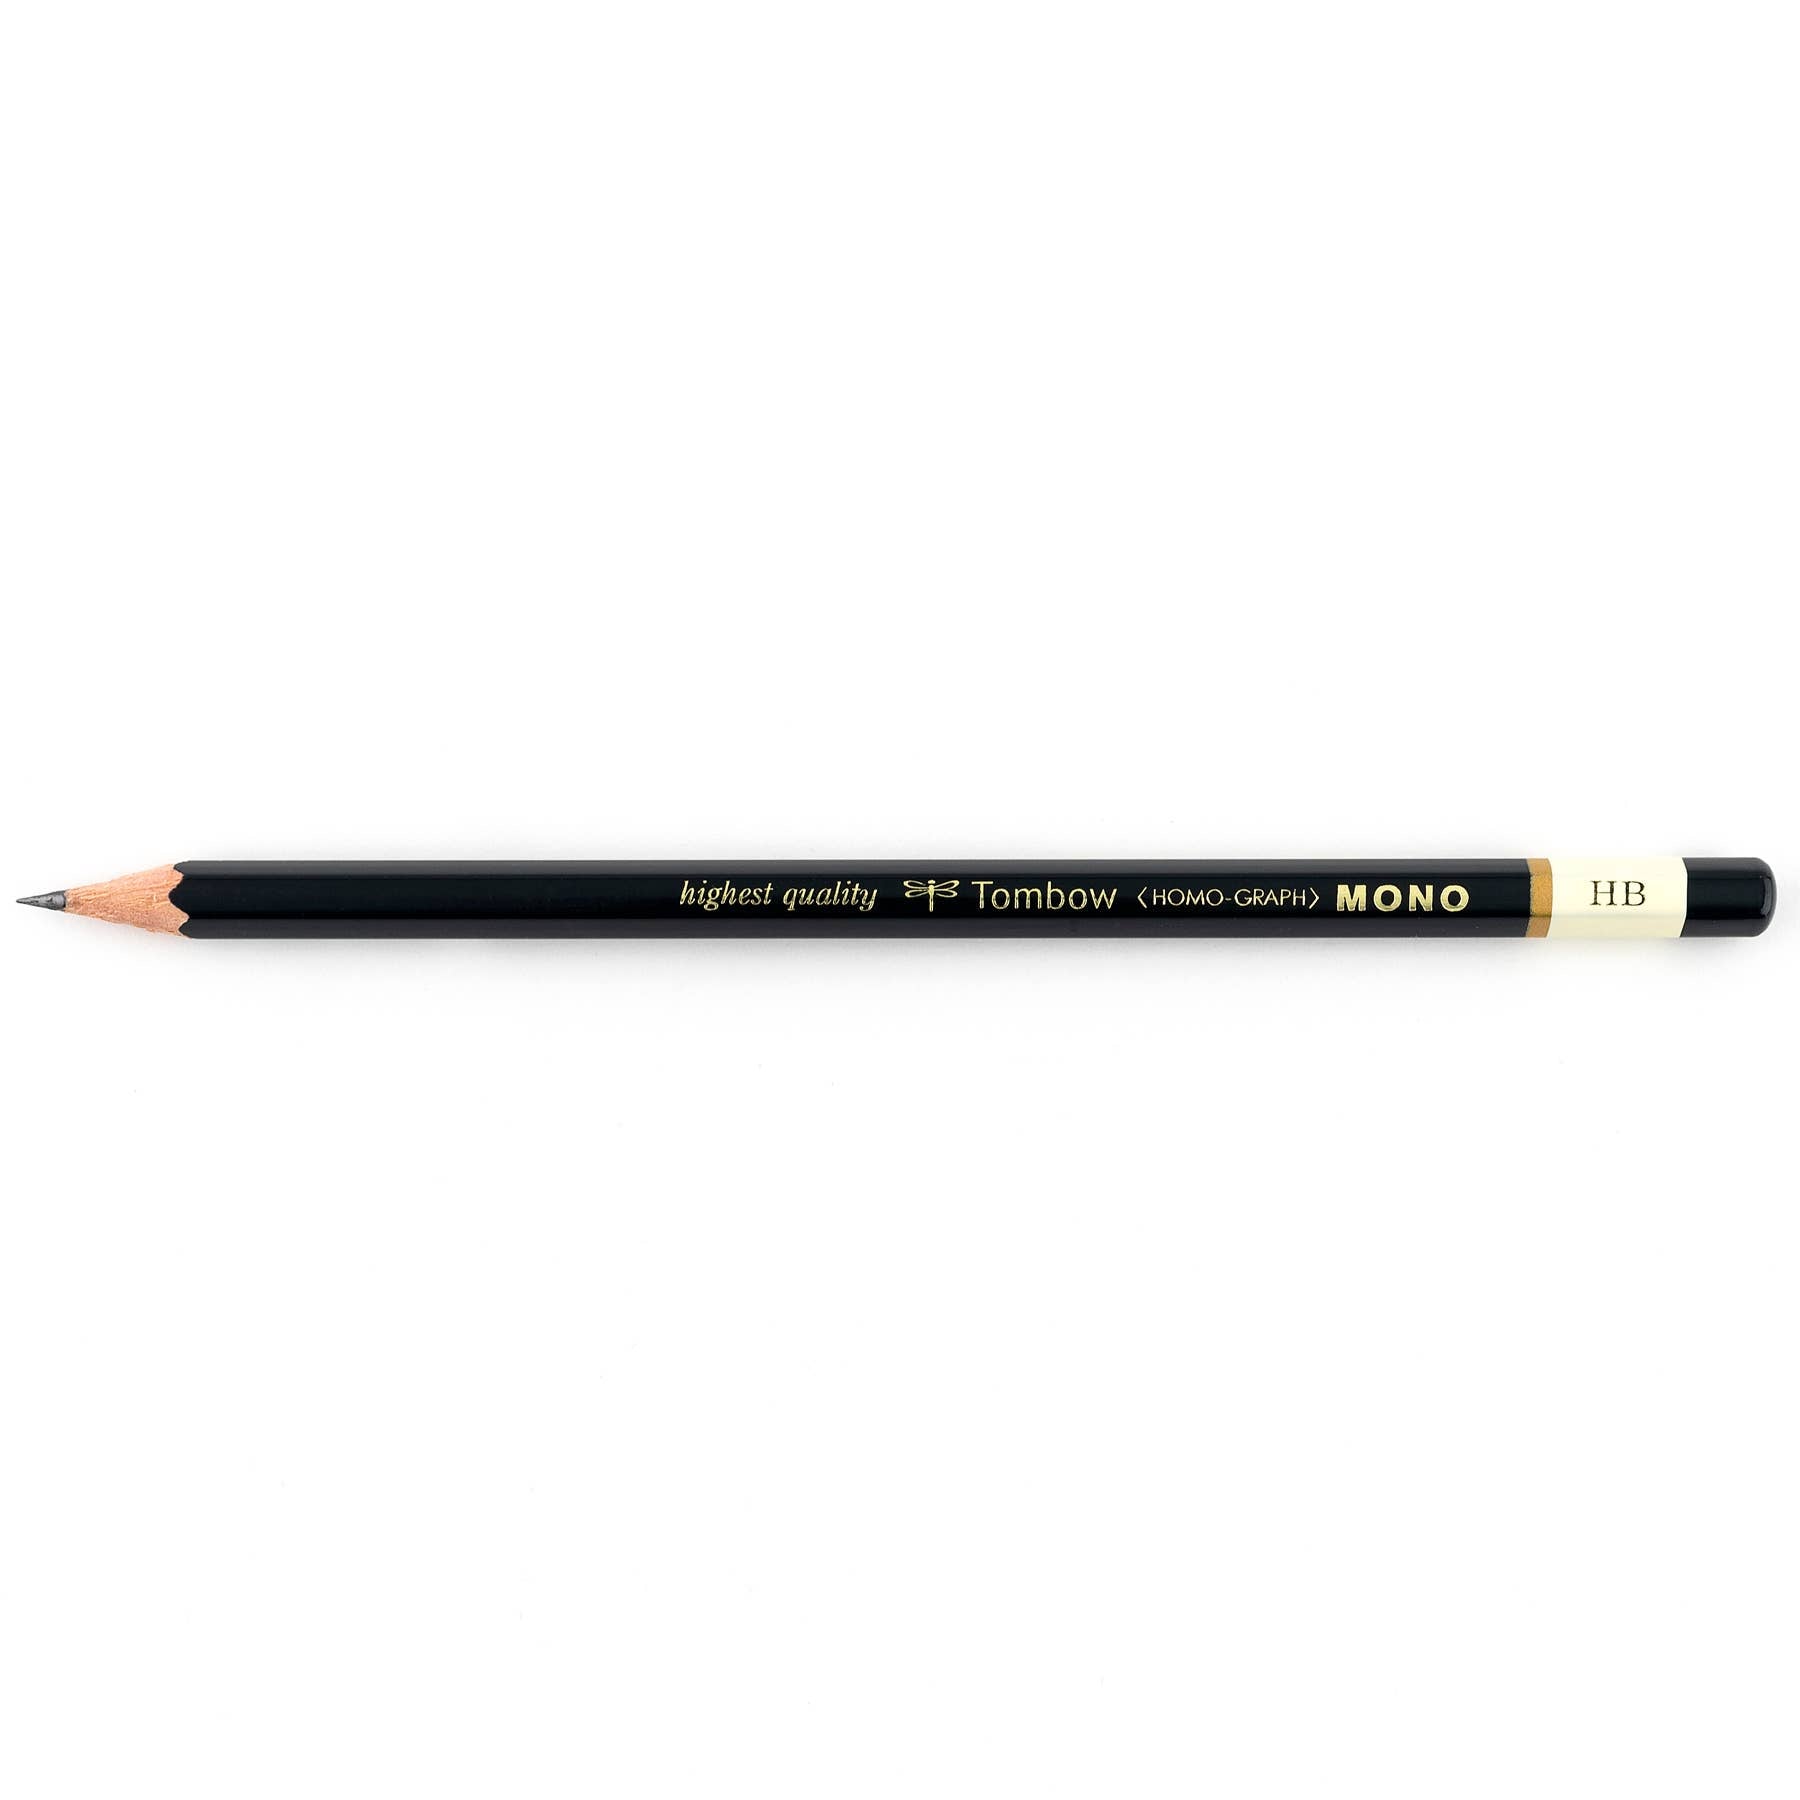 MONO Drawing Pencil Set  12-Pack